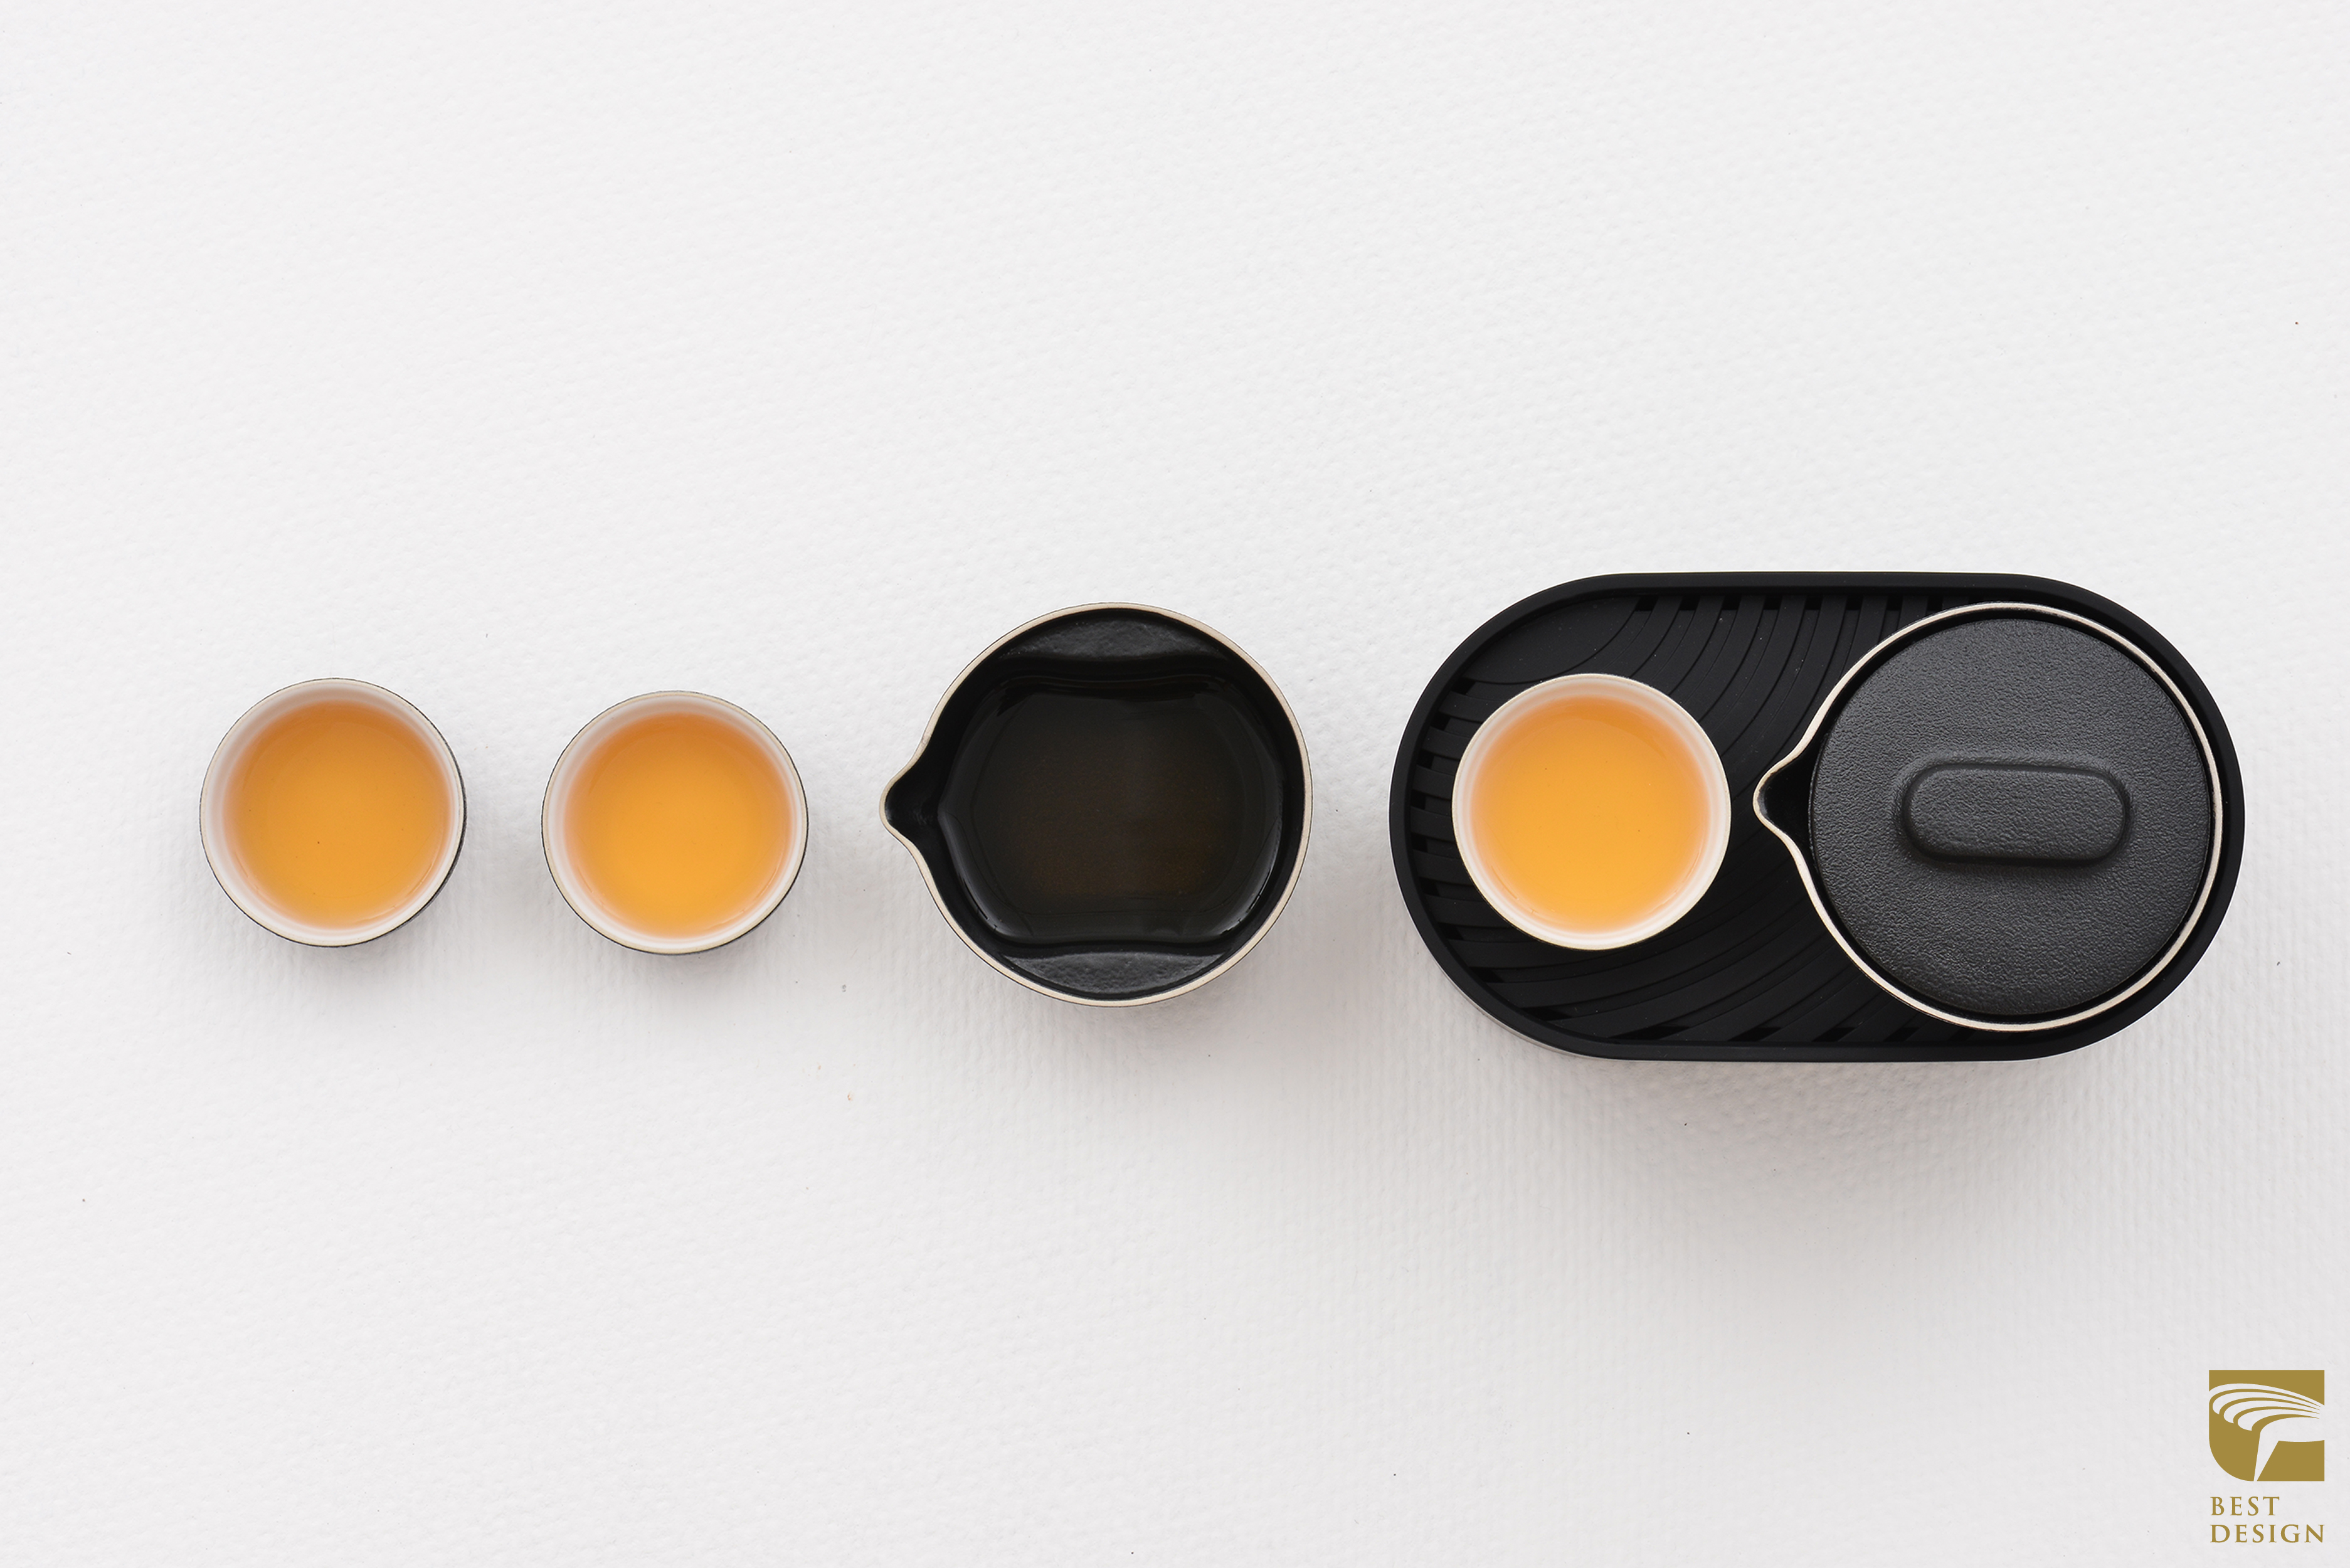 Mini Tea Set T1 by Balance Design, Image courtesy of Golden Pin Design Awards